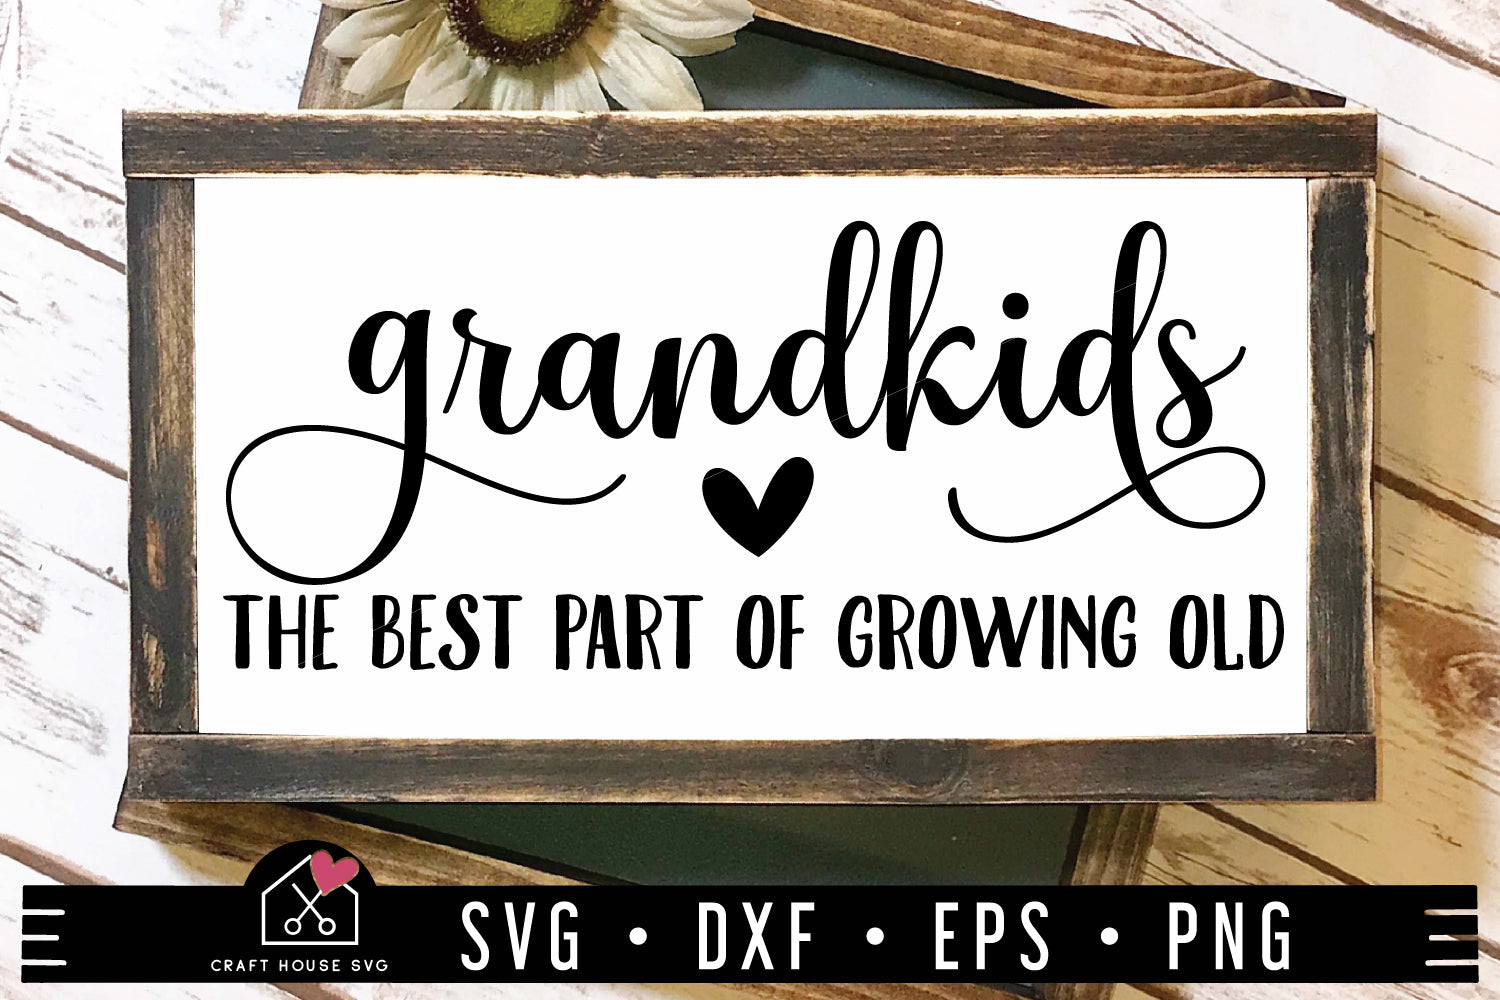 Grandkids the best part of growing old SVG Grandparents Sign Cut File